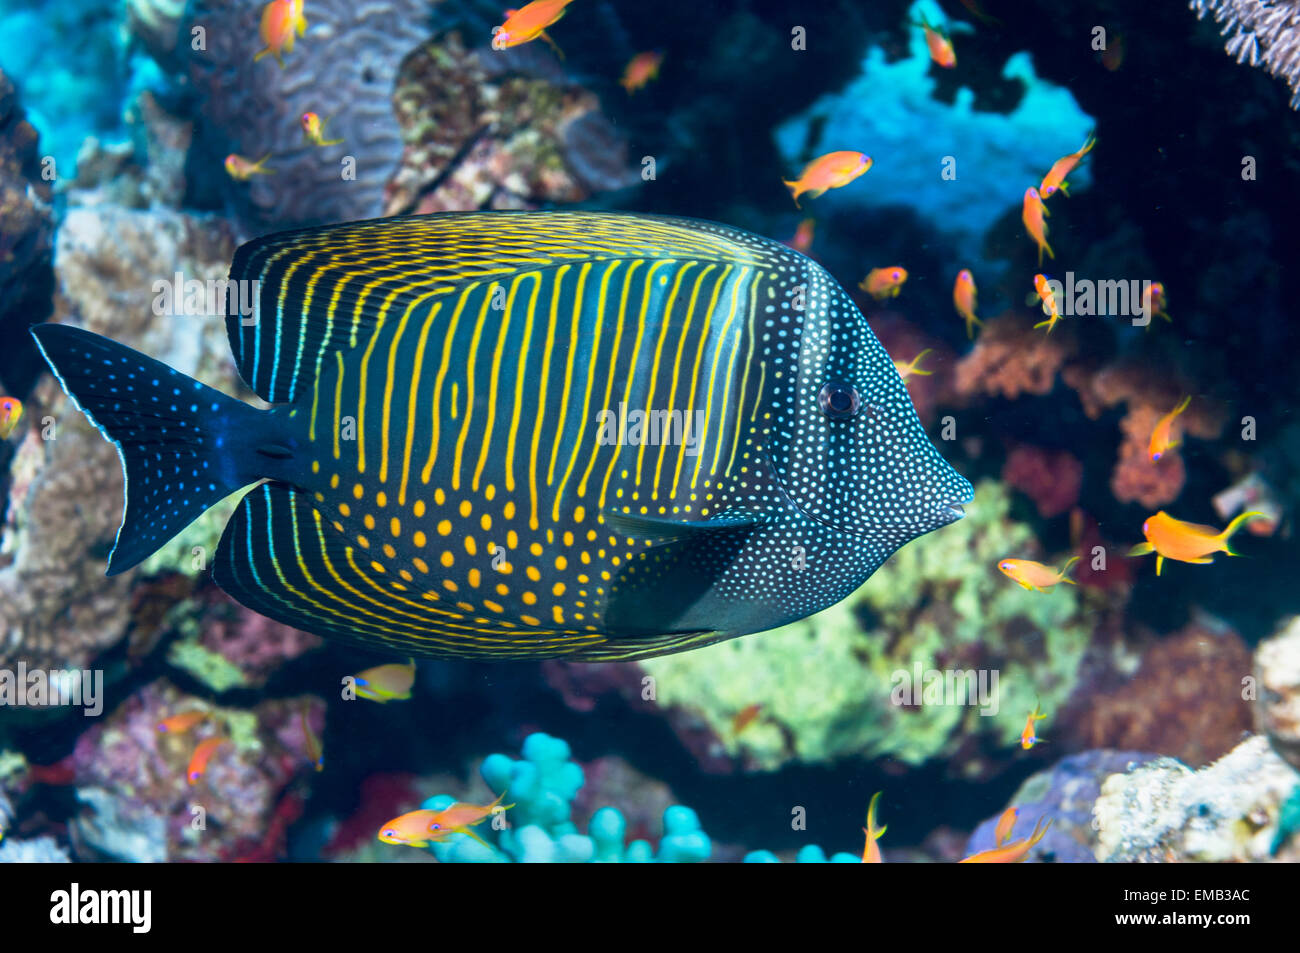 Red Sea sailfin tang or Desjardin's sailfin tang (Zebrasoma desjardinii).  Egypt, Red Sea. Stock Photo